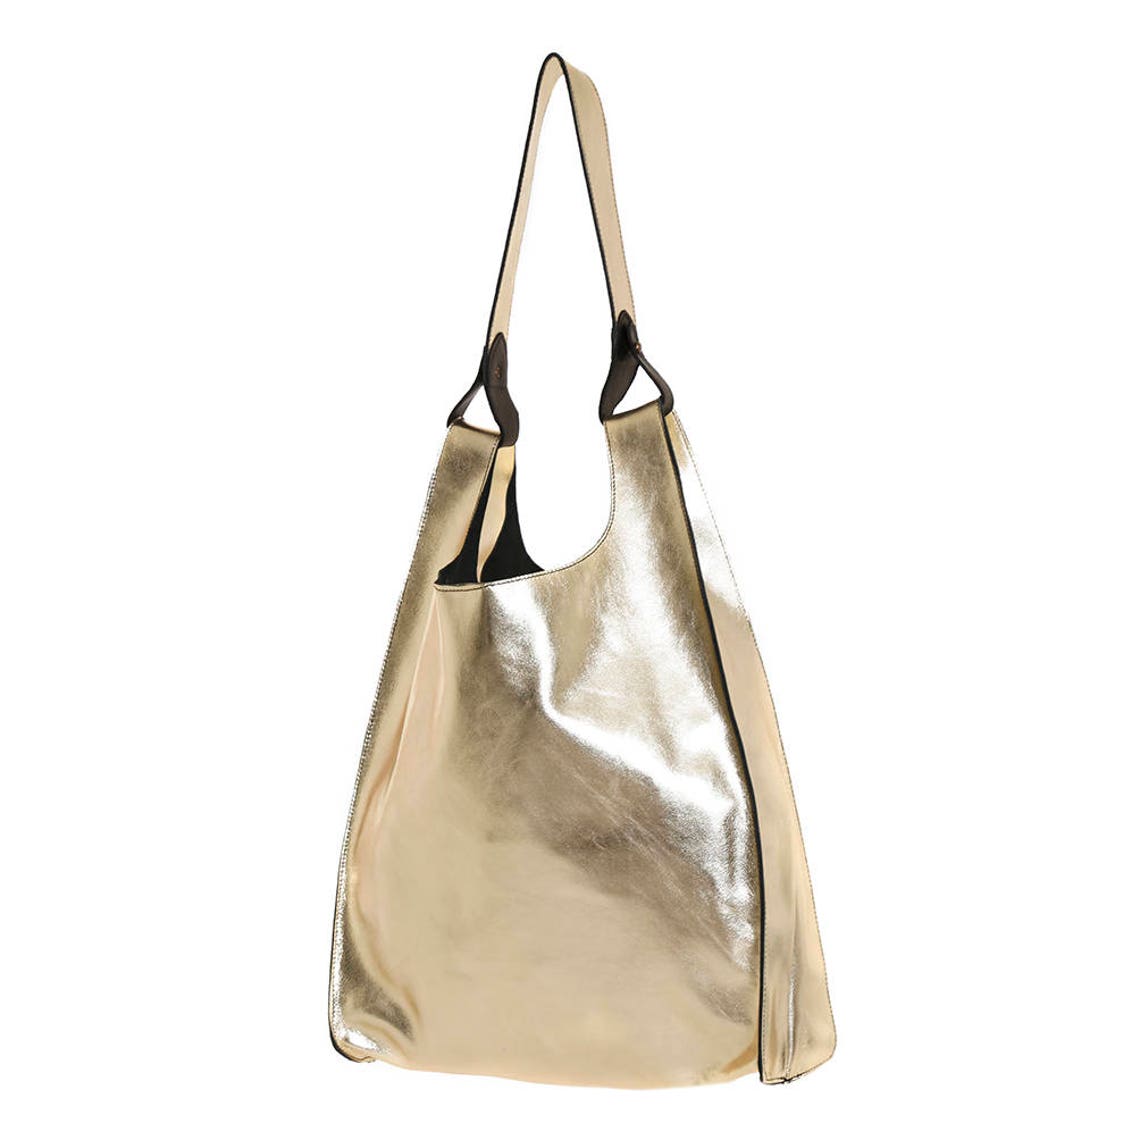 Gold leather shoulder bag metallic leather tote bag shiny | Etsy